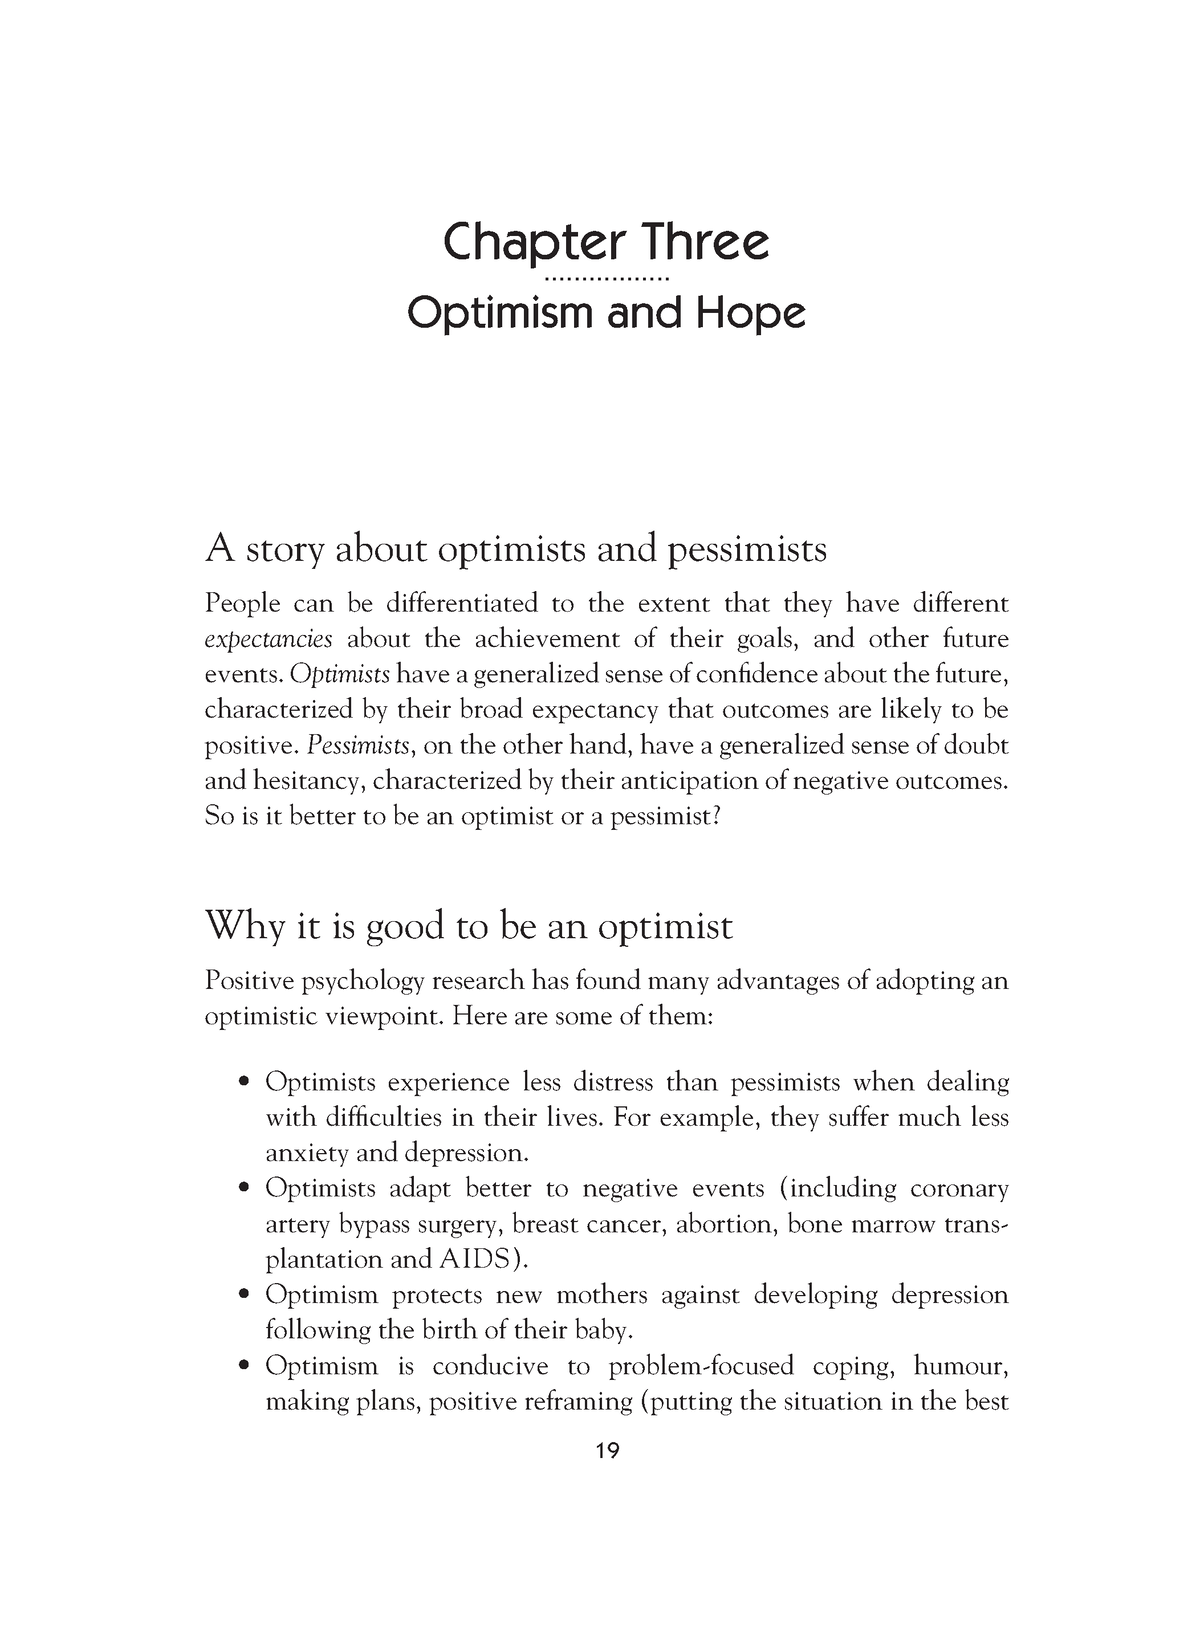 3.5 Boniwell 2006 Chapter 3. Optimism and Hope - Positive psychology ...